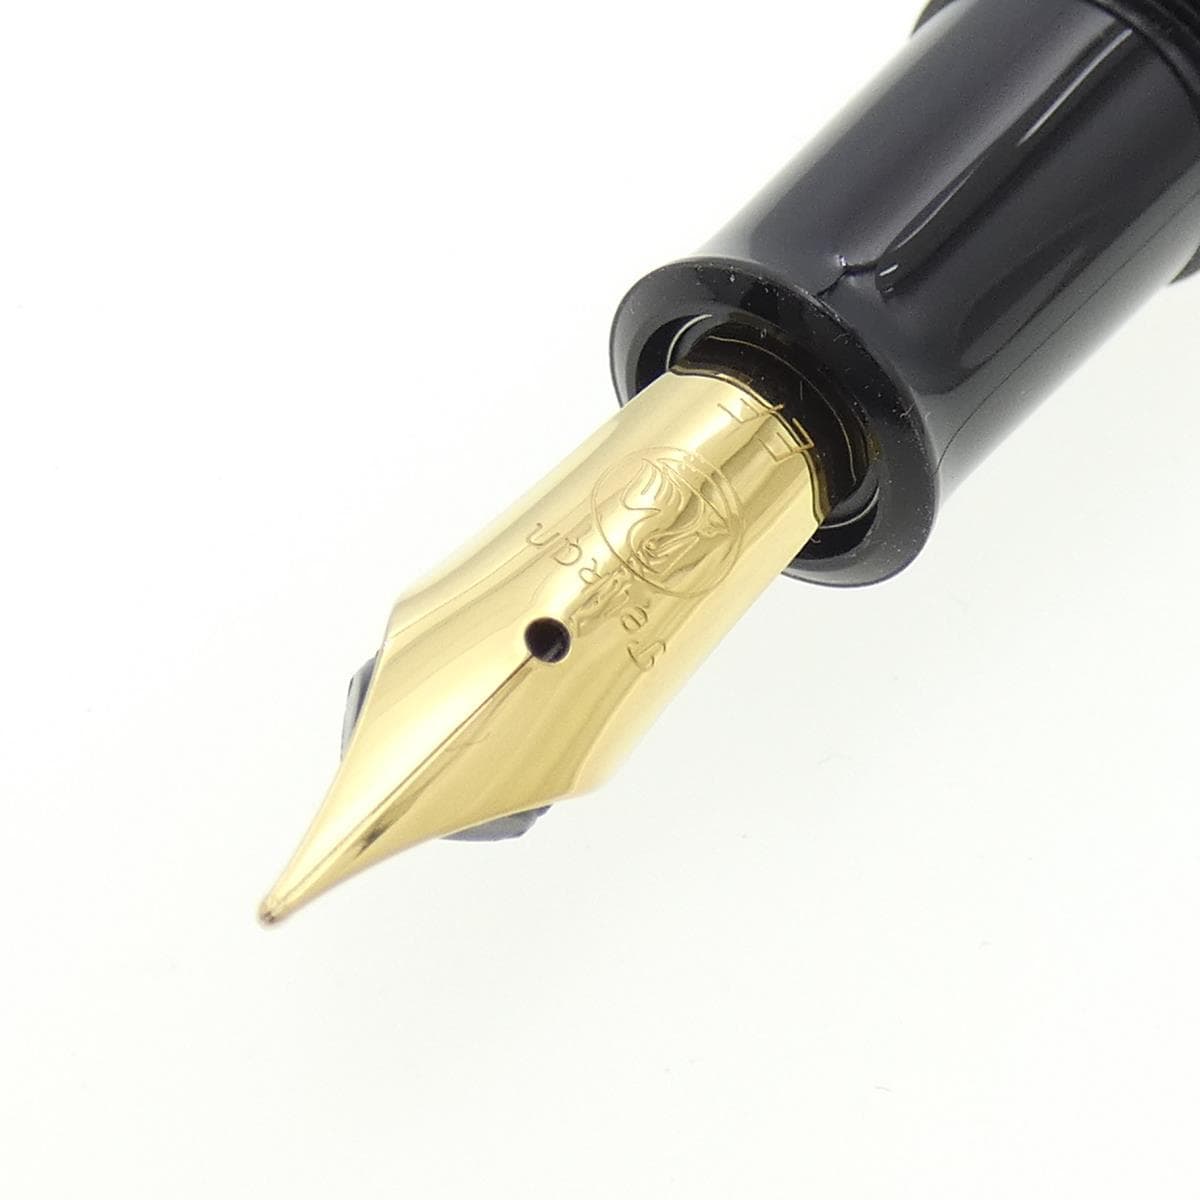 [BRAND NEW] Pelikan Classic M200 Marble BRAUN Fountain Pen